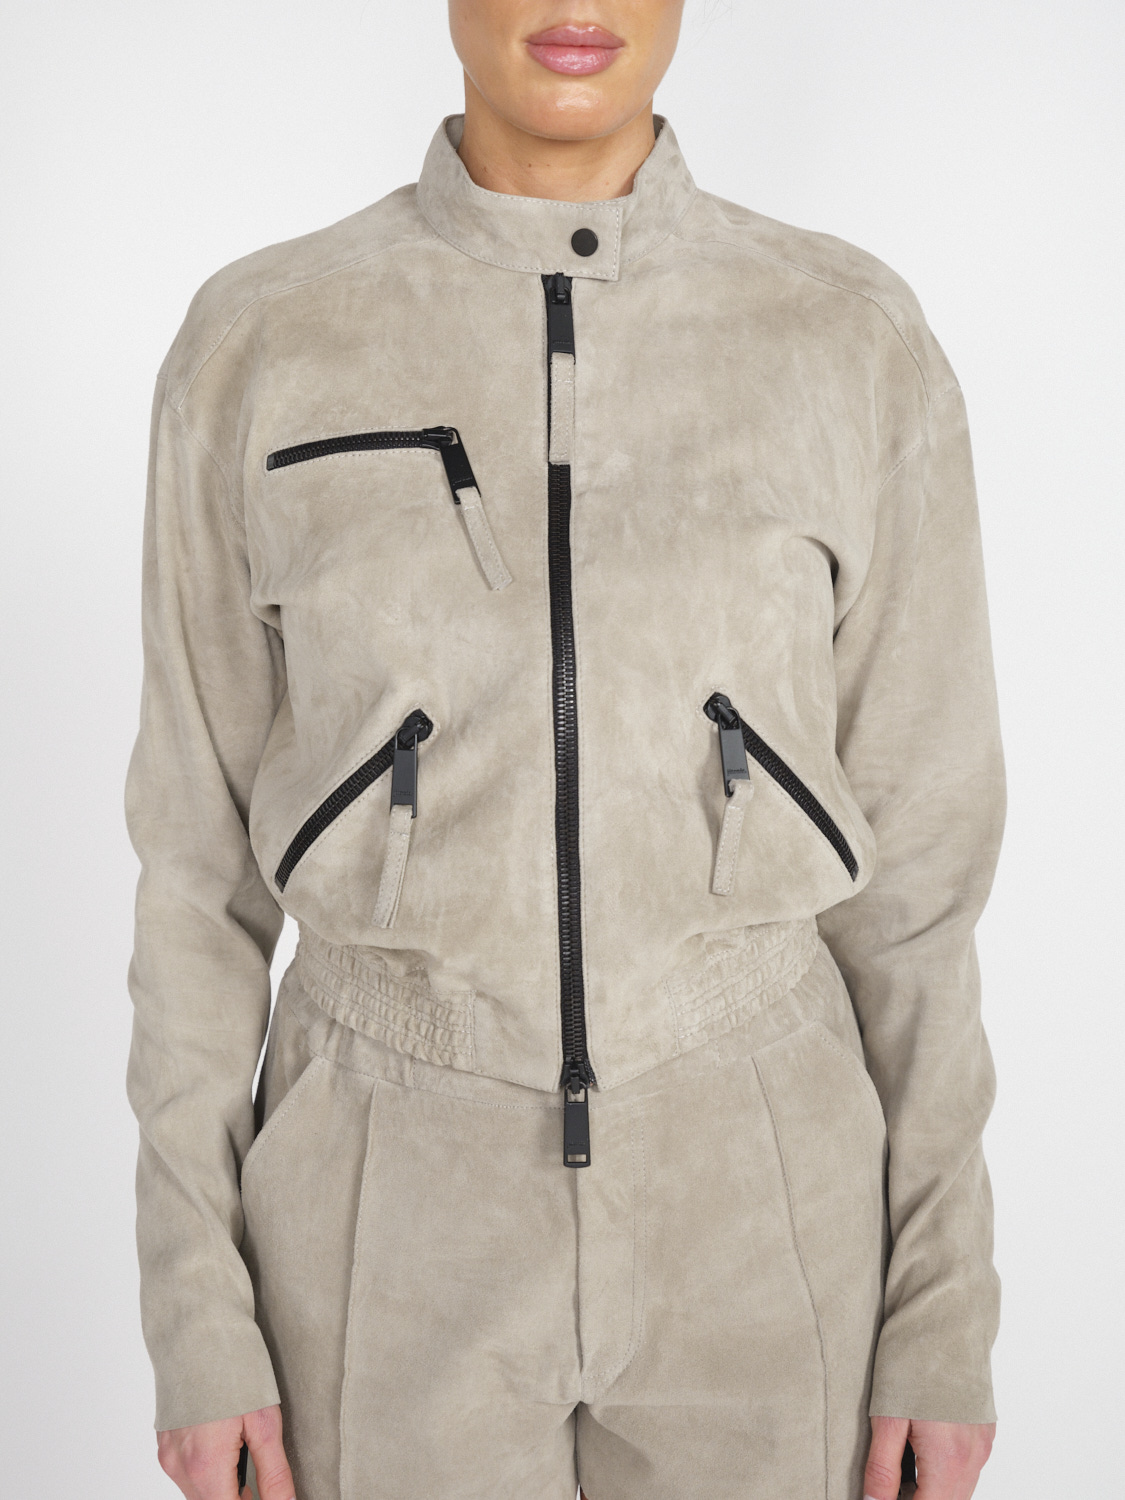 jitrois Blof – Stretchige Veloursleder-Jacke mit schwarzen Zippern  beige 34